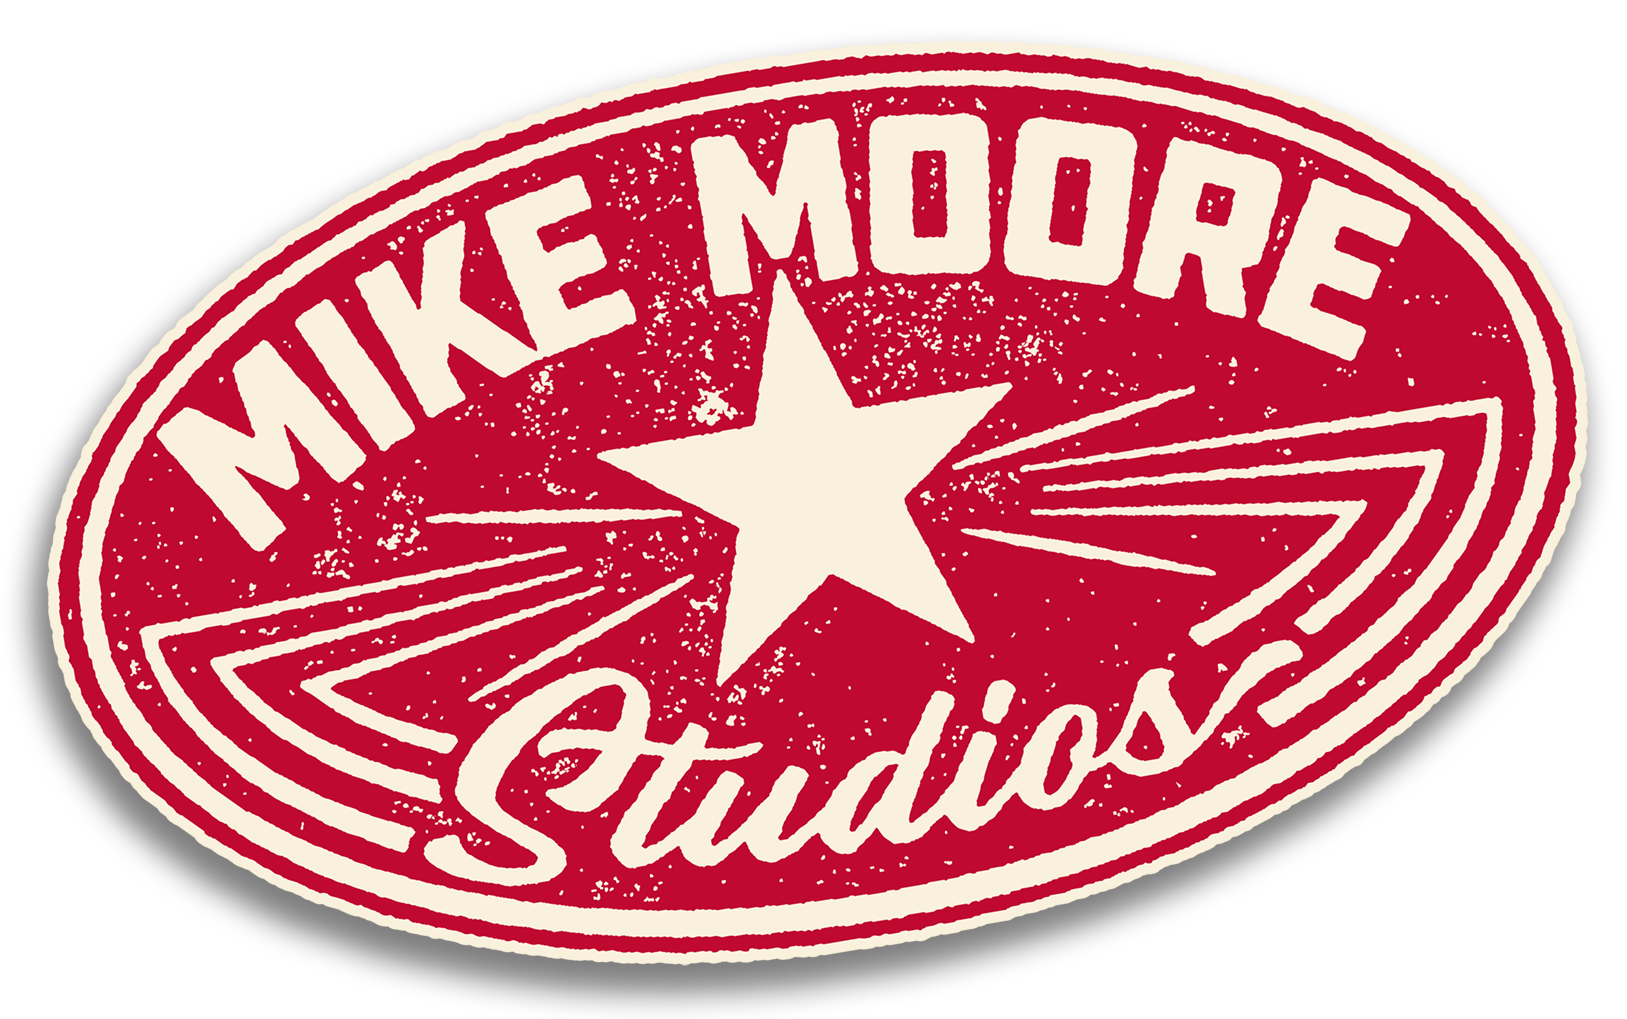 Mike Moore Studios